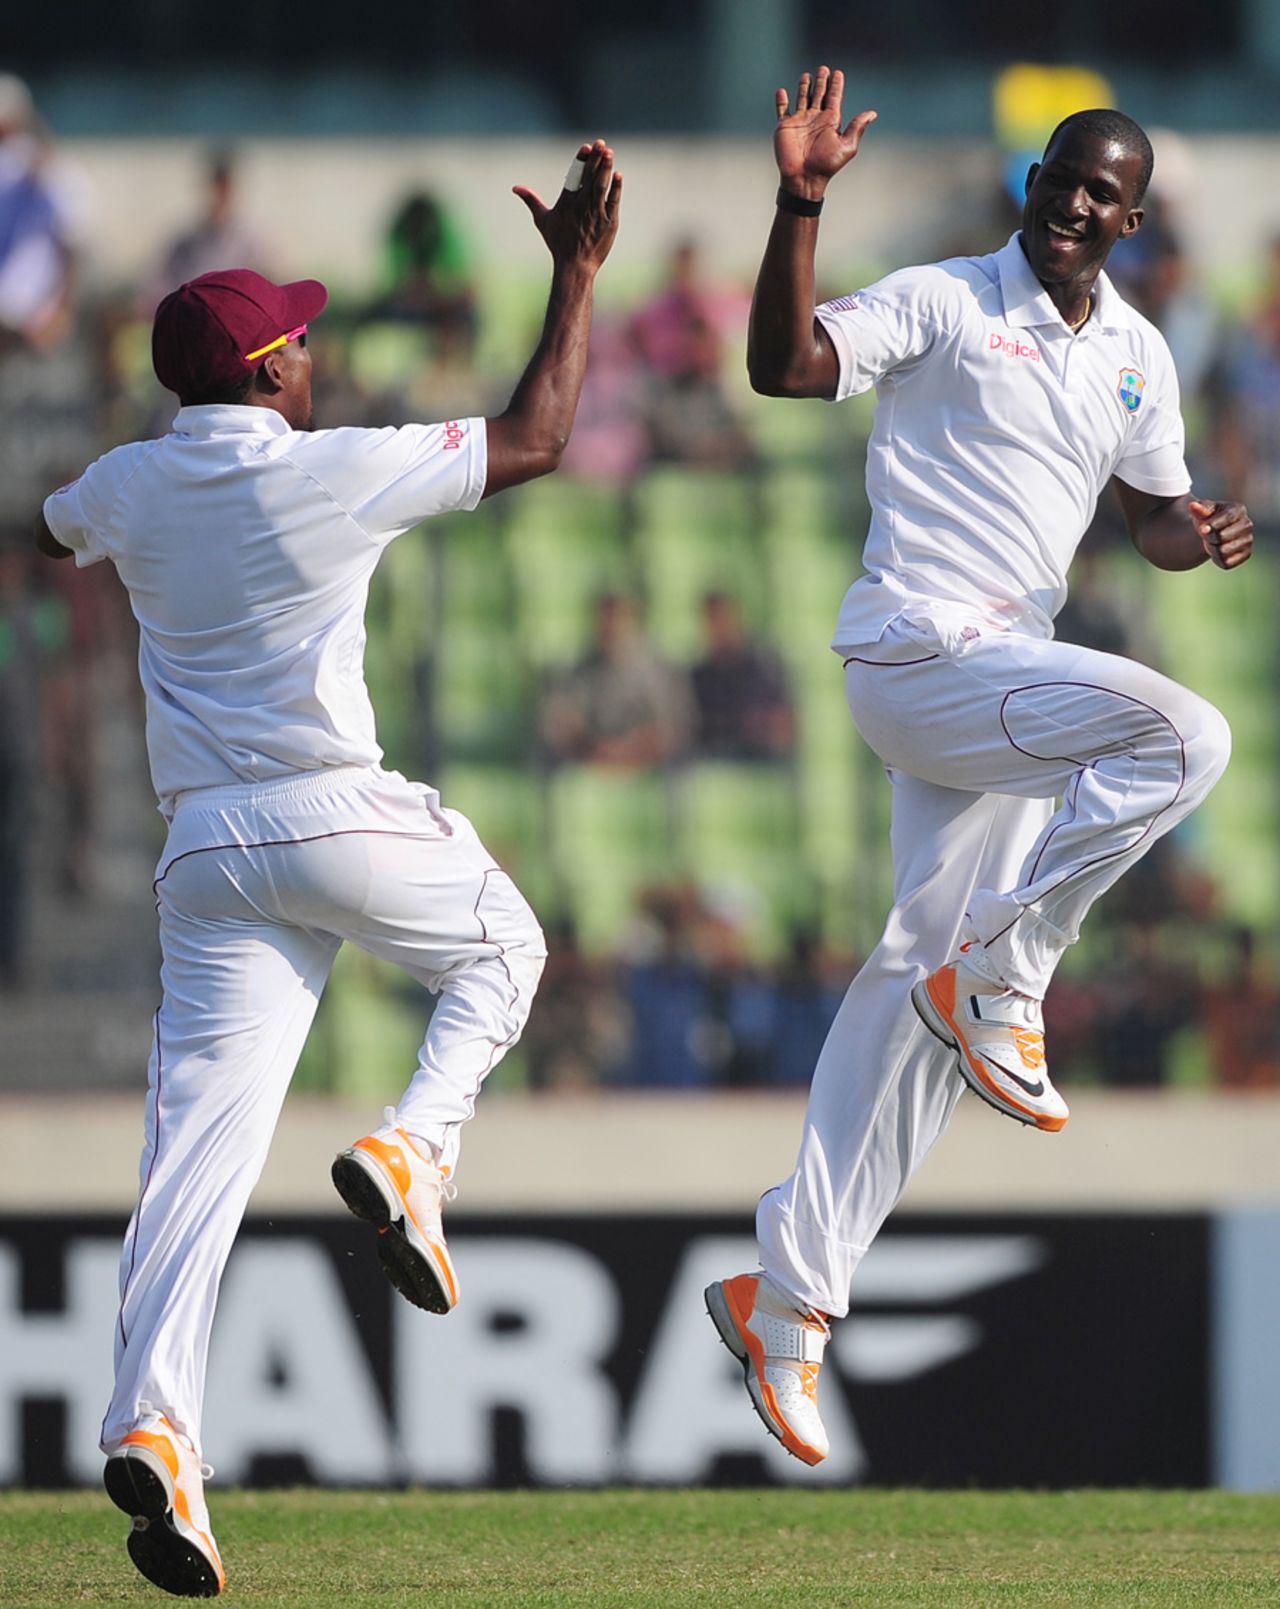 Darren Sammy dismissed the centurion Naeem Islam, Bangladesh v West Indies, 1st Test, Mirpur, 3rd day, November 15, 2012